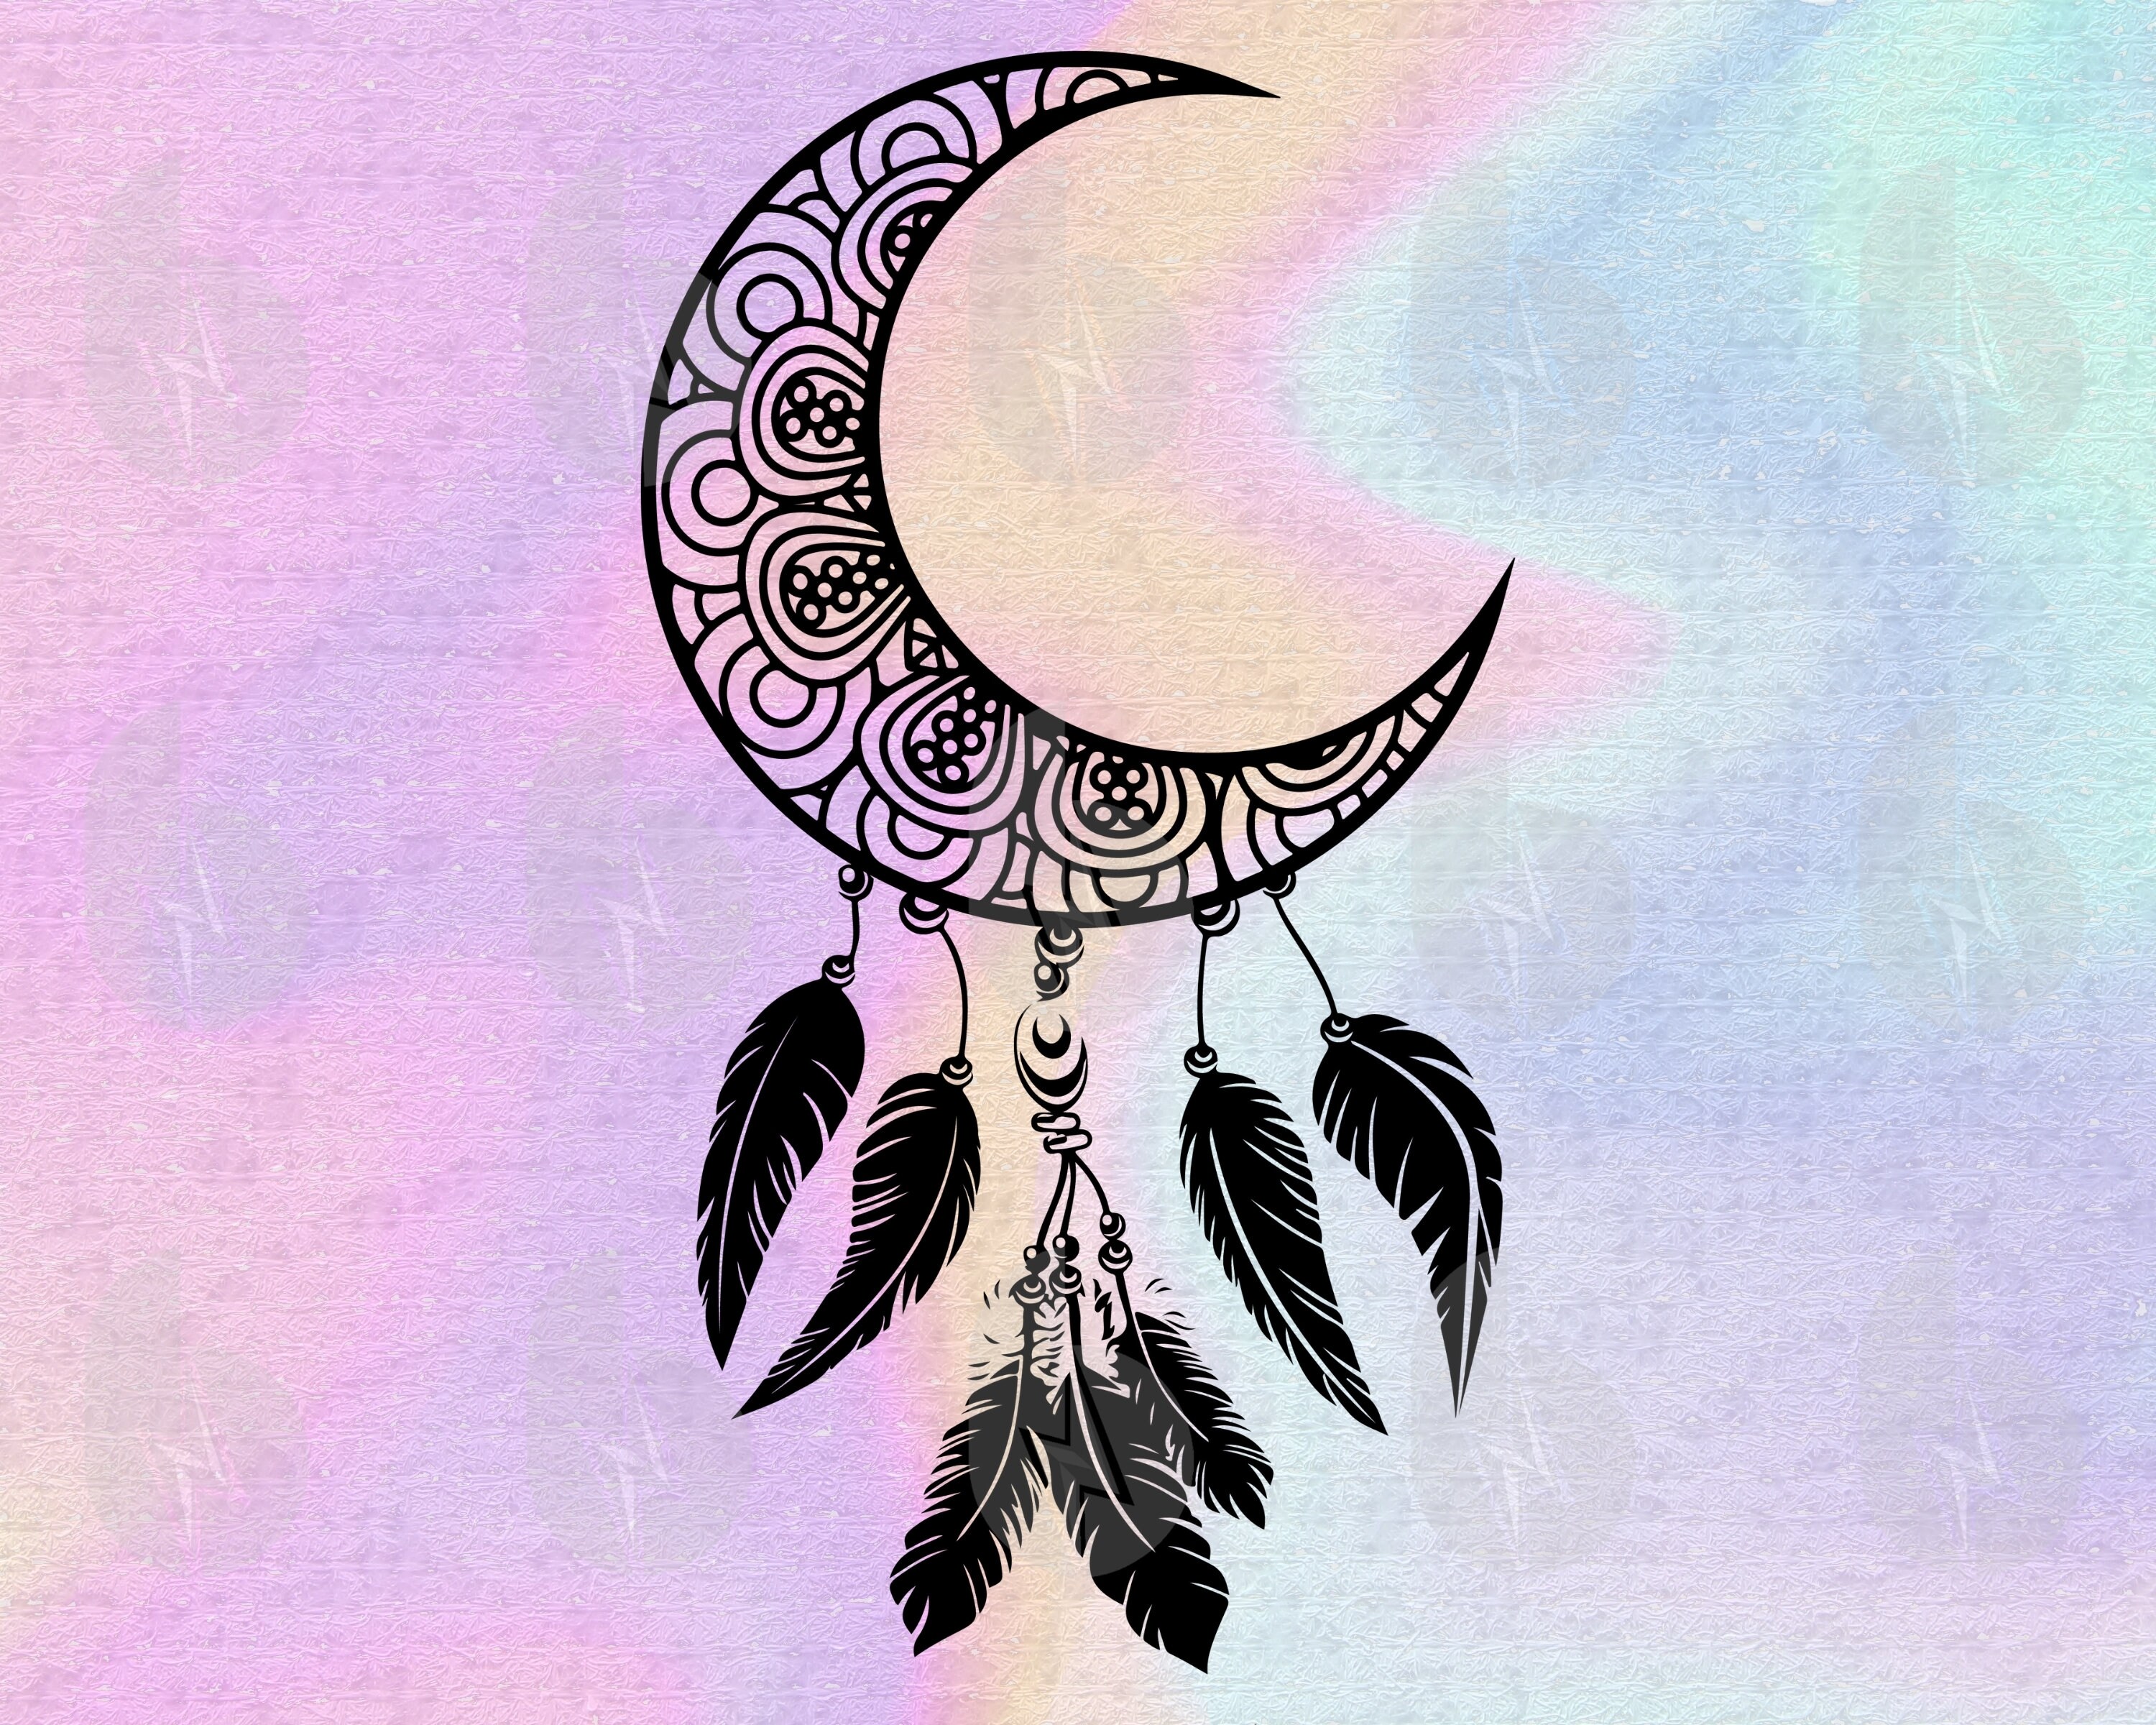 1. Crescent Moon Dream Catcher Tattoo Designs - wide 11